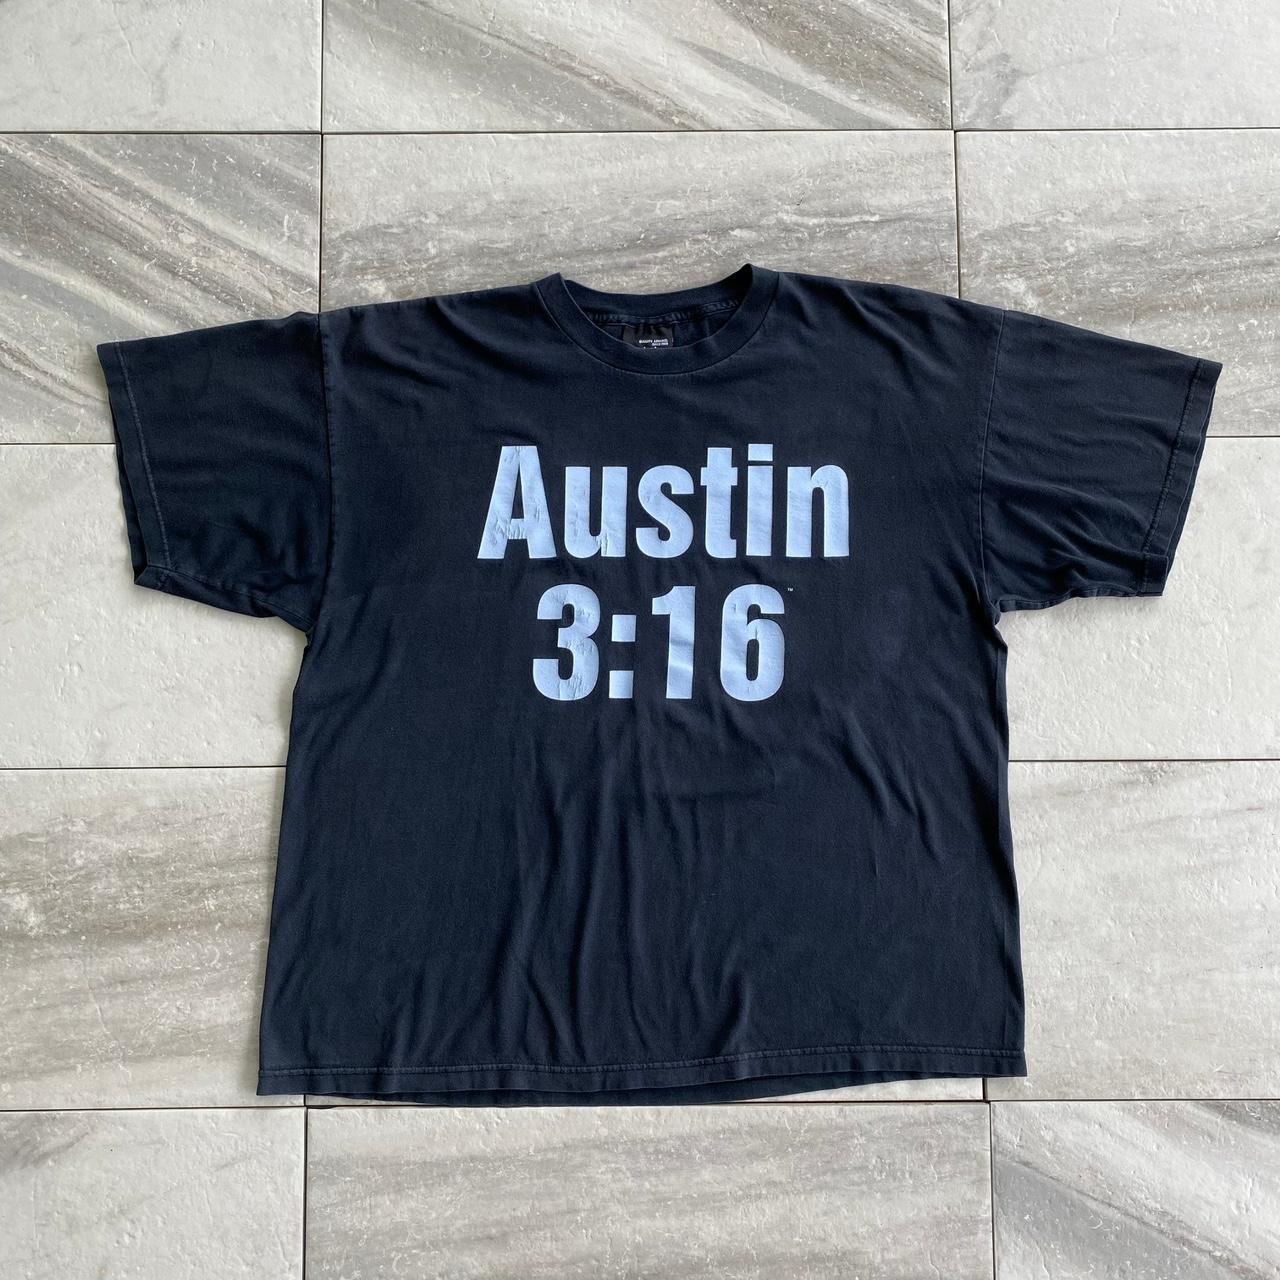 Men's Black Stone Cold Steve Austin 3:16 T-Shirt